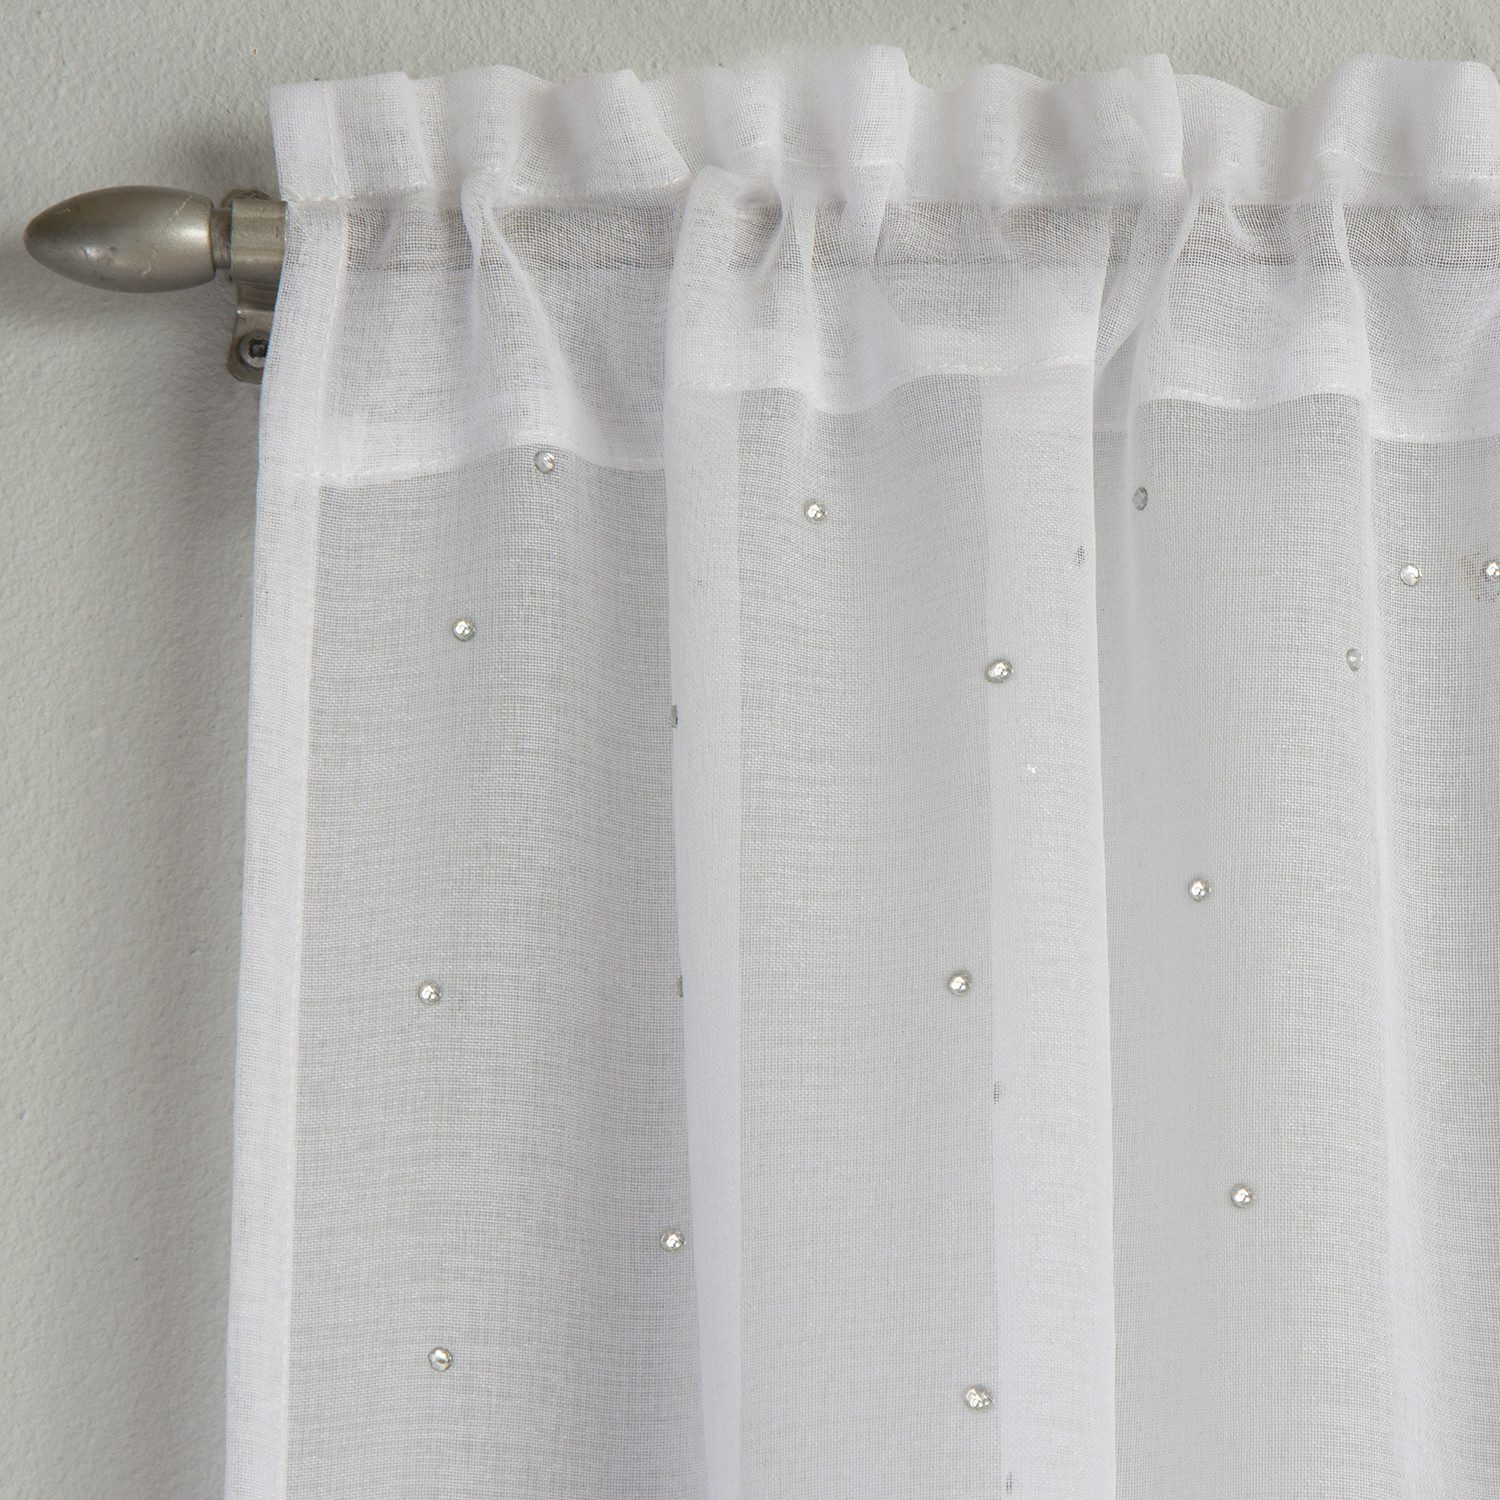 White Jewel Voile Curtain 122 x 140cm Image 1